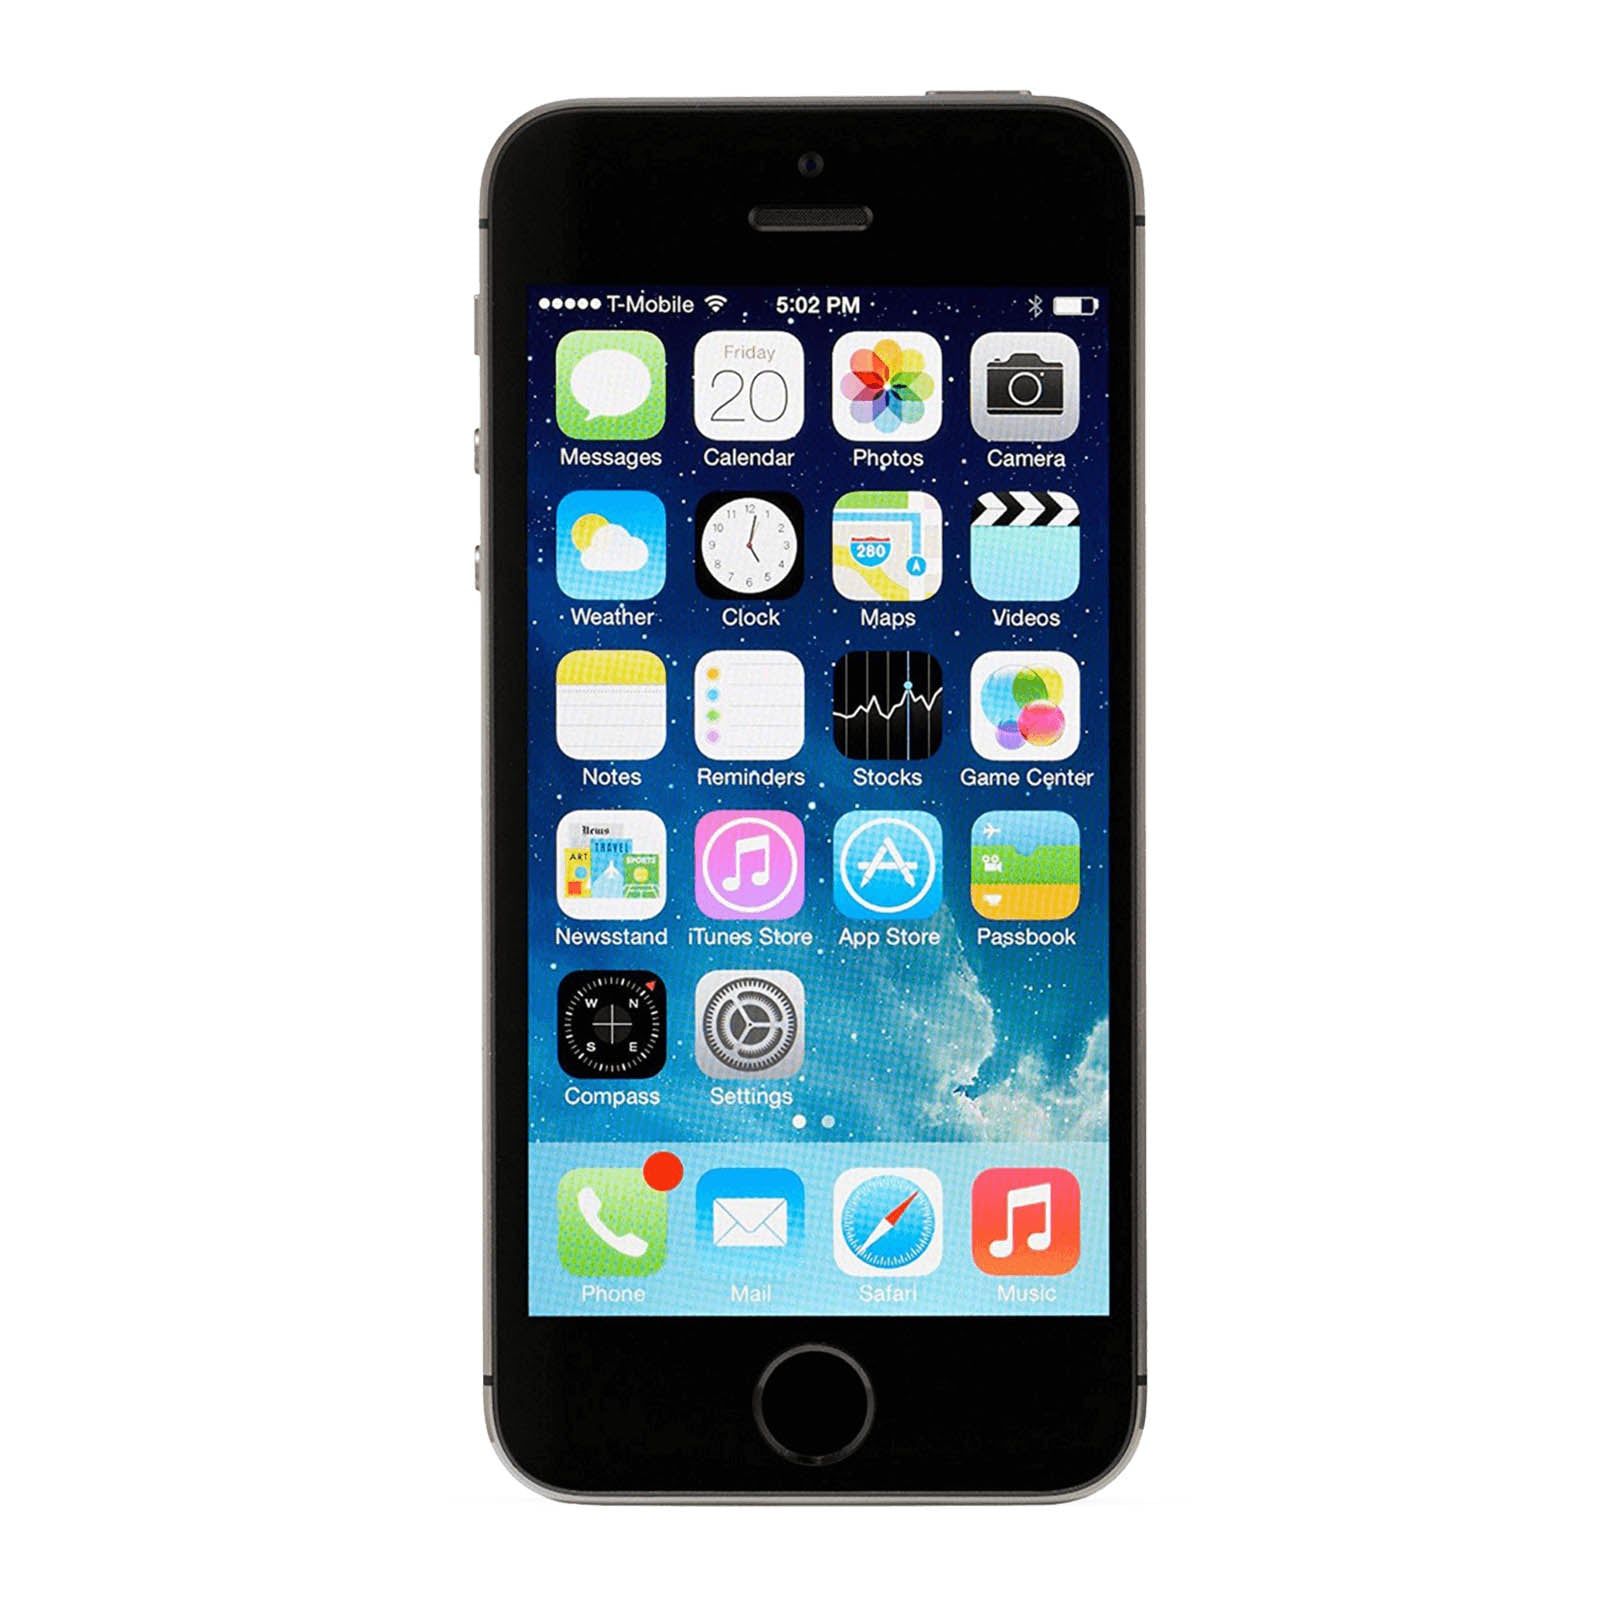 Apple iPhone SE 128GB Space Grey Good - Unlocked